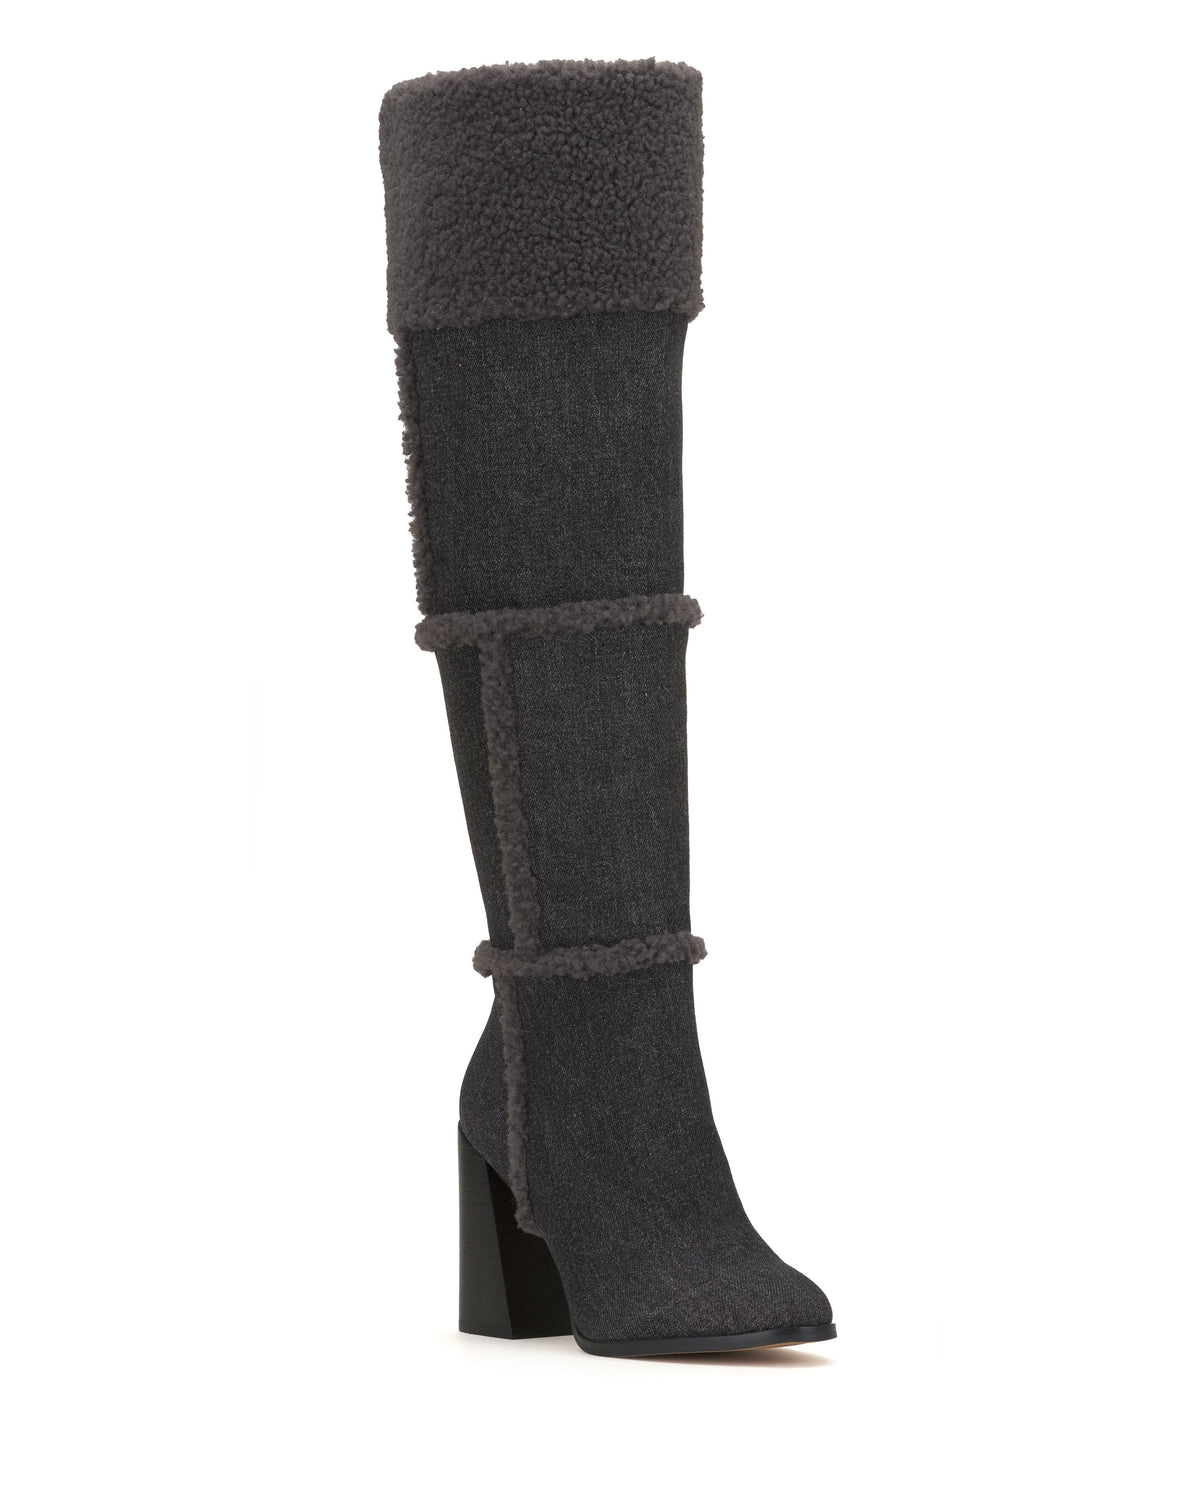 Jessica Simpson Rustina Knee High faux shearling denim grey boot